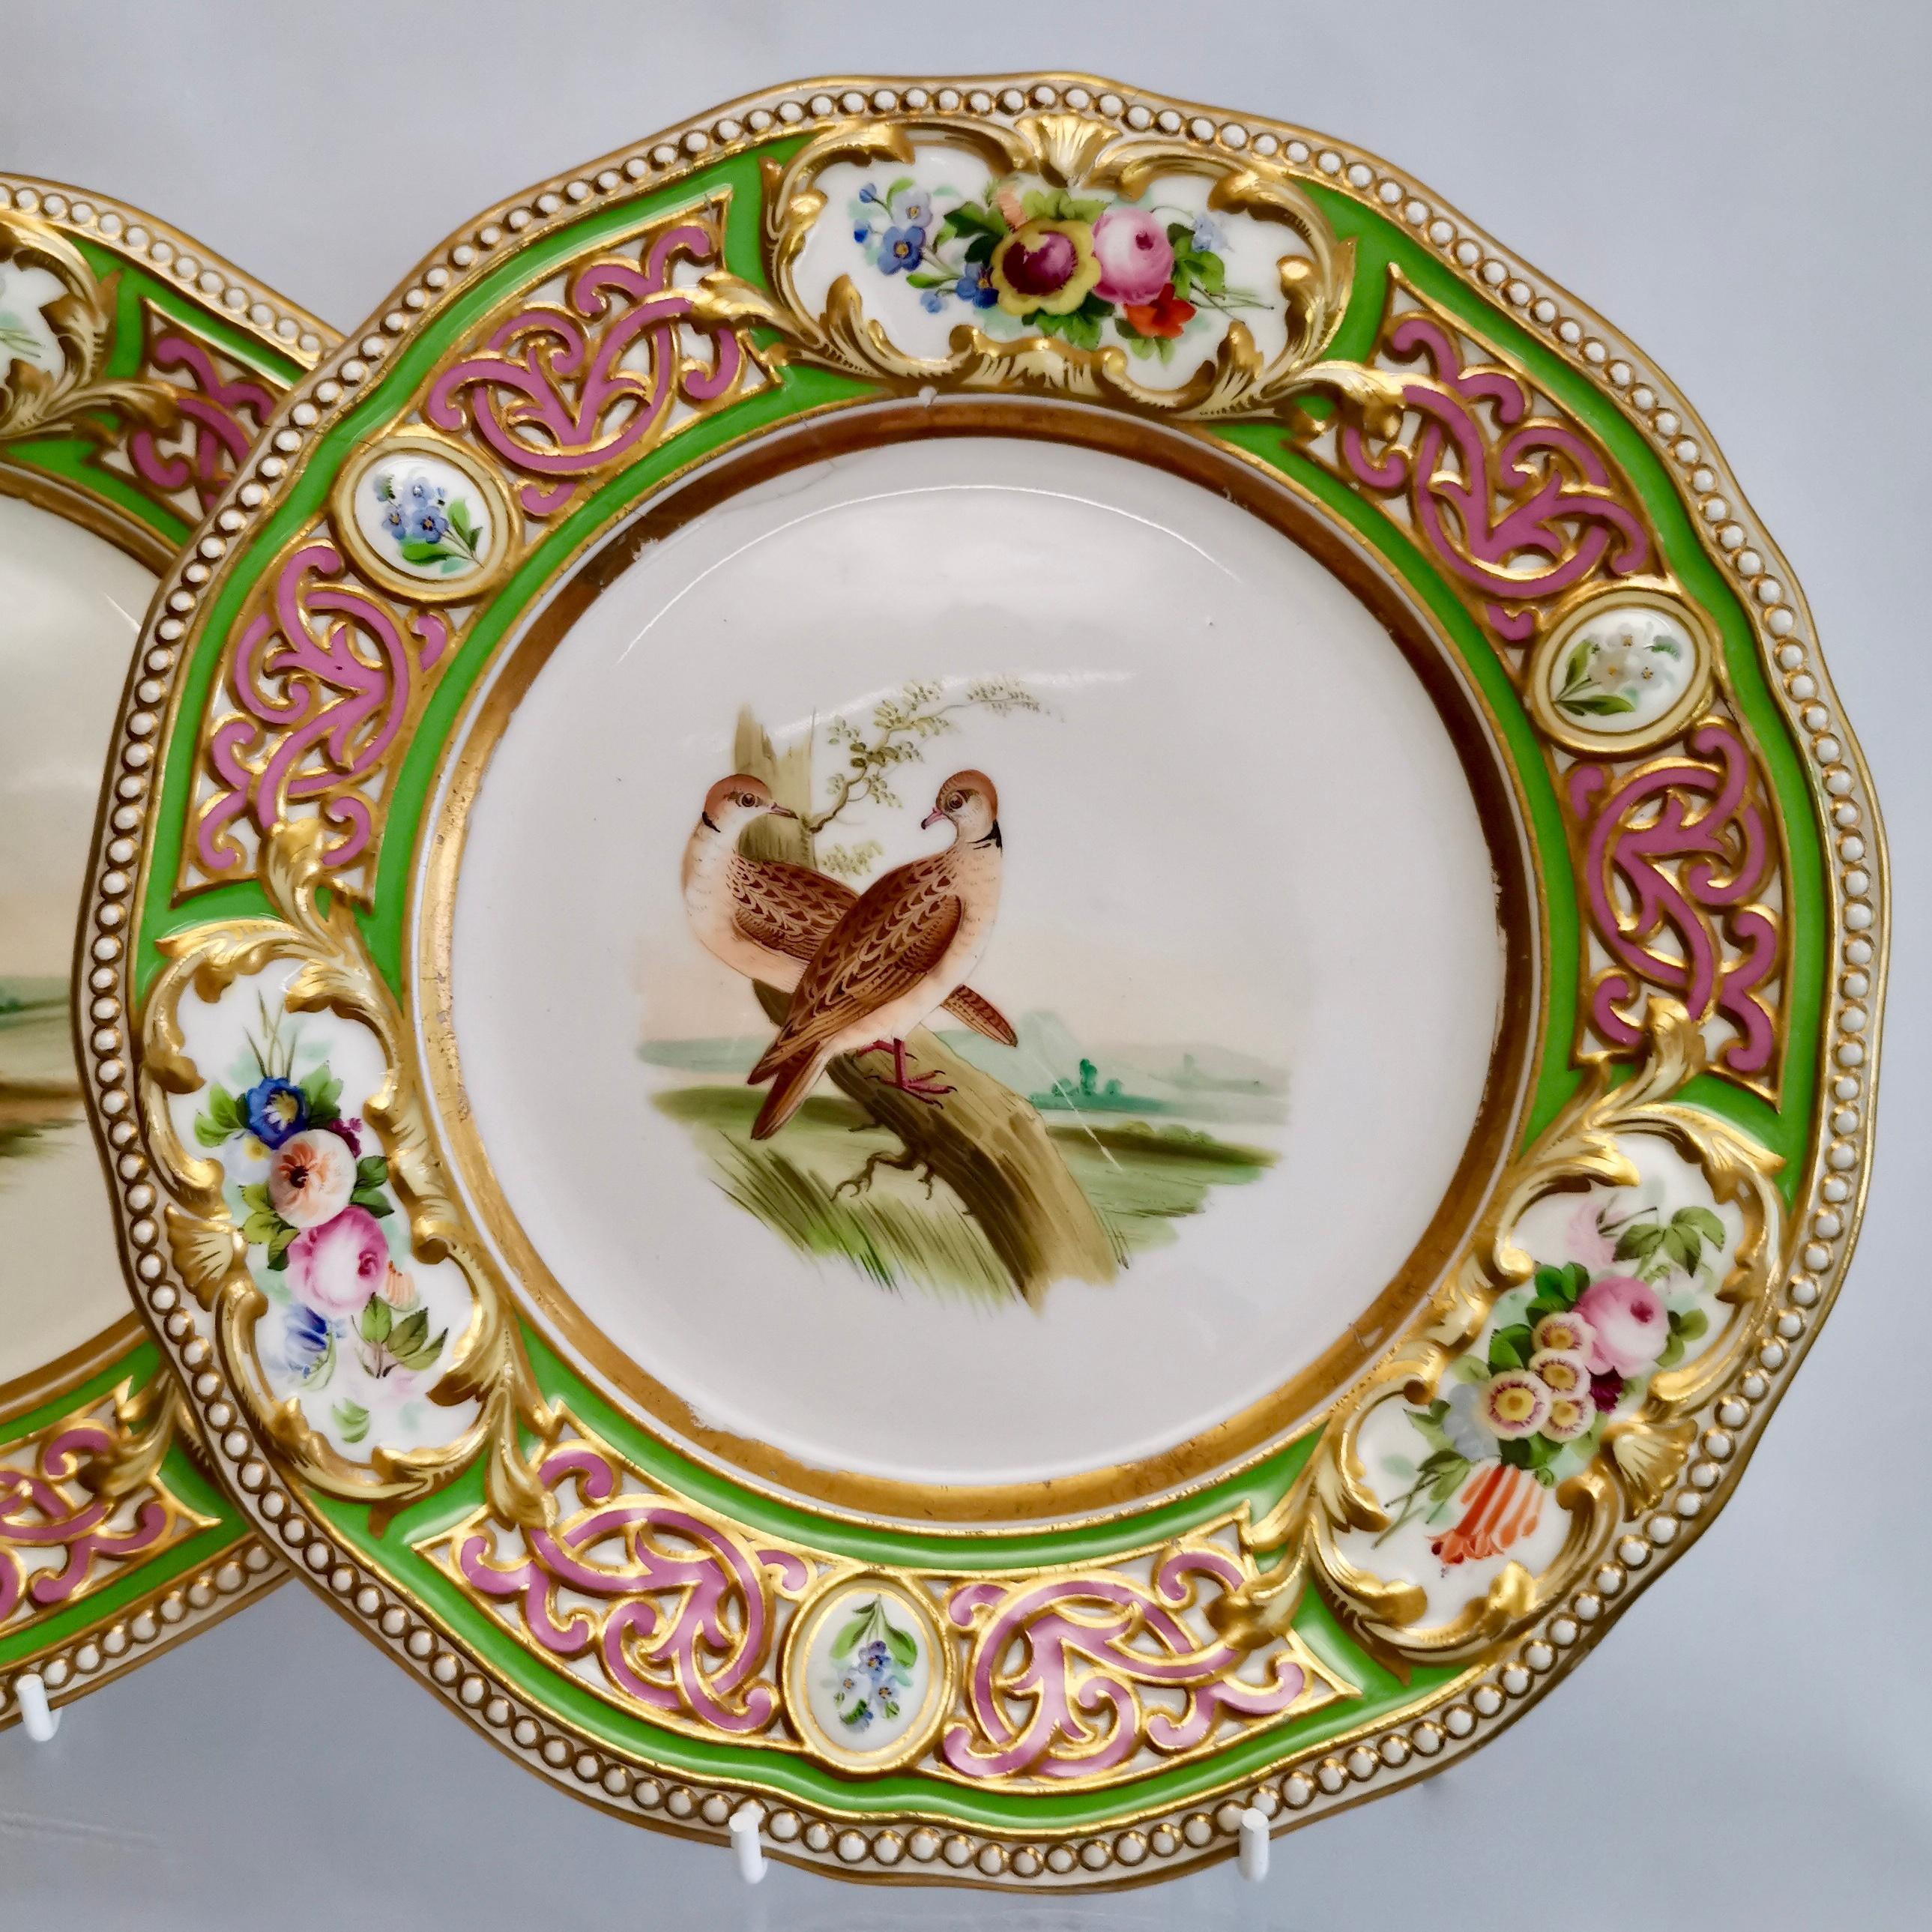 Grainger Worcester Porcelain Dessert Service, Persian Revival with Birds, 1855 4